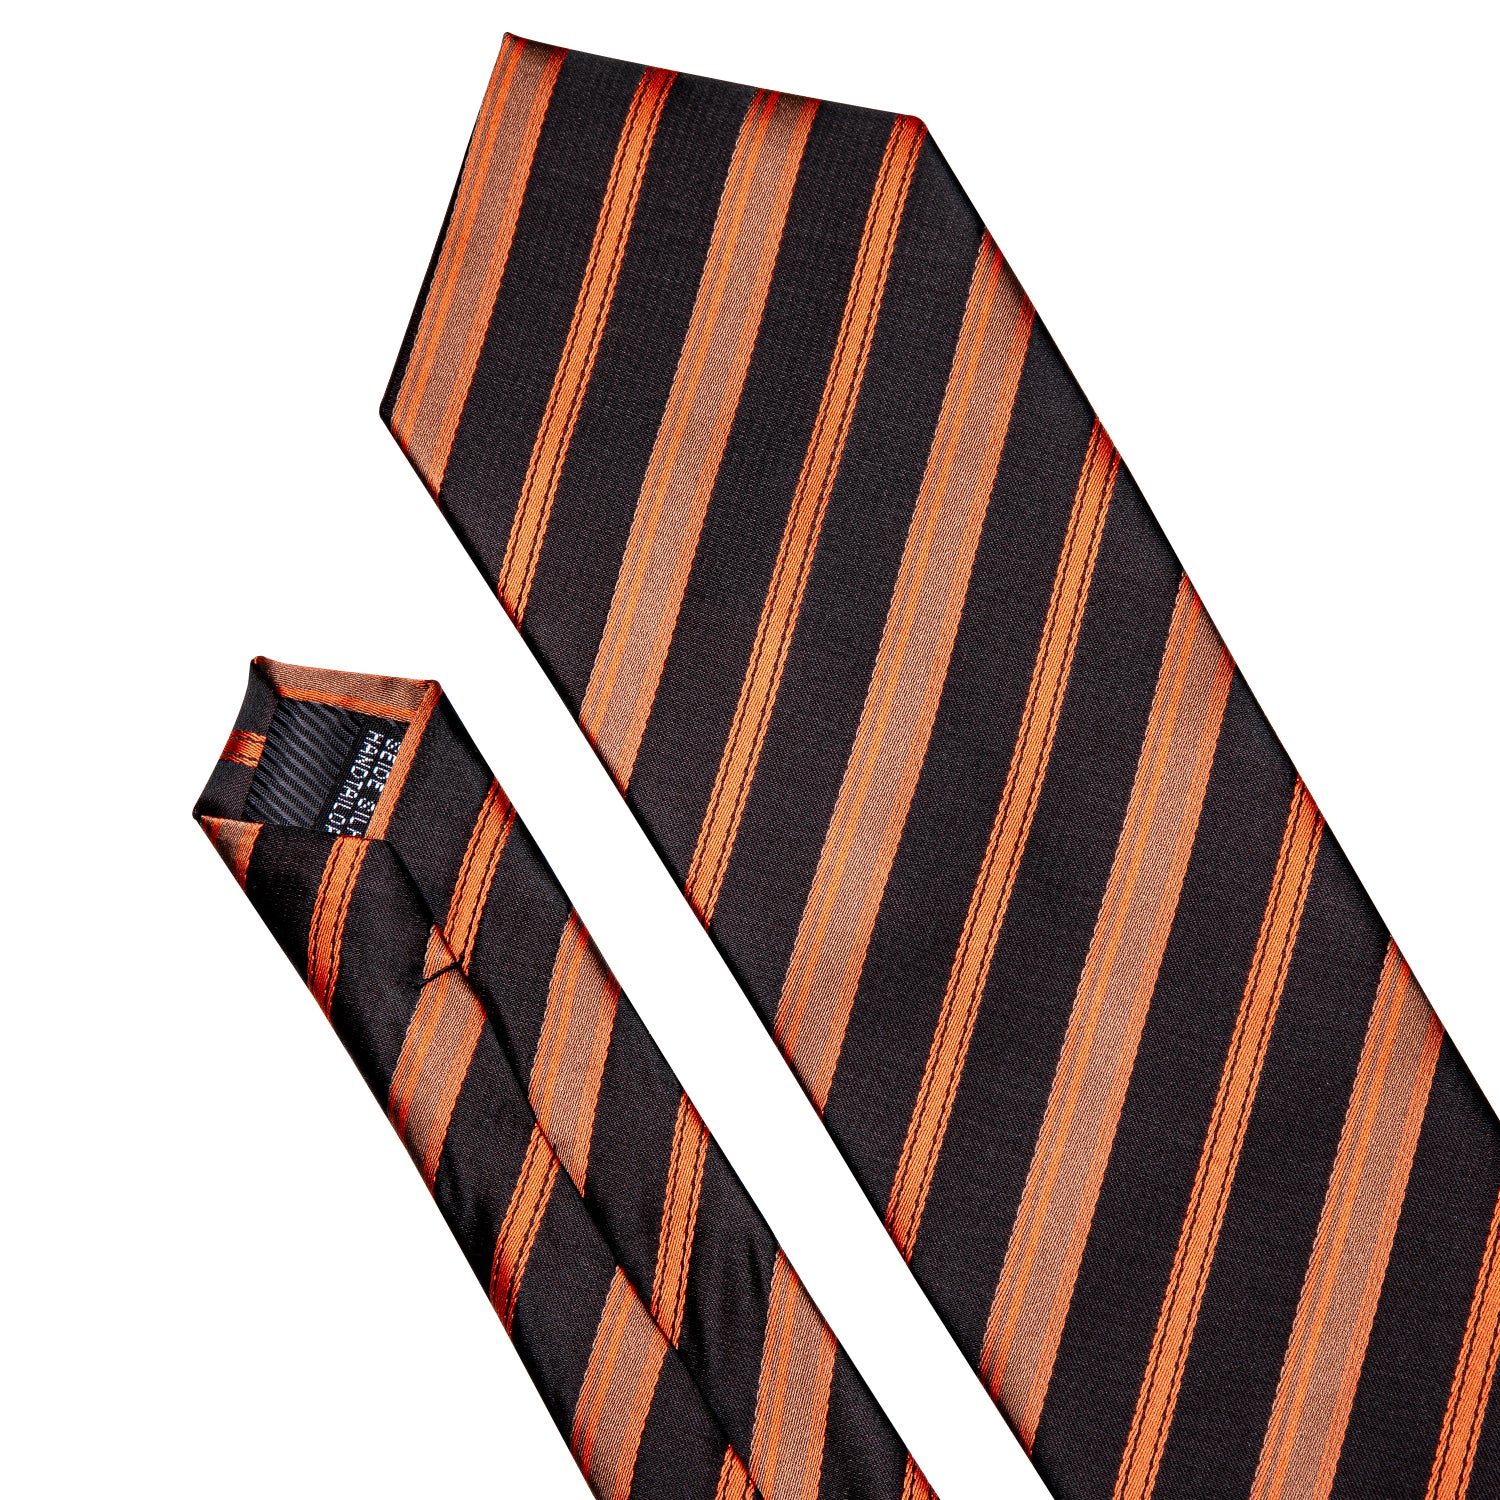 Barry.wang Black Tie Orange Brown Stripe Men's Tie Set with Lapel Pin Brooch